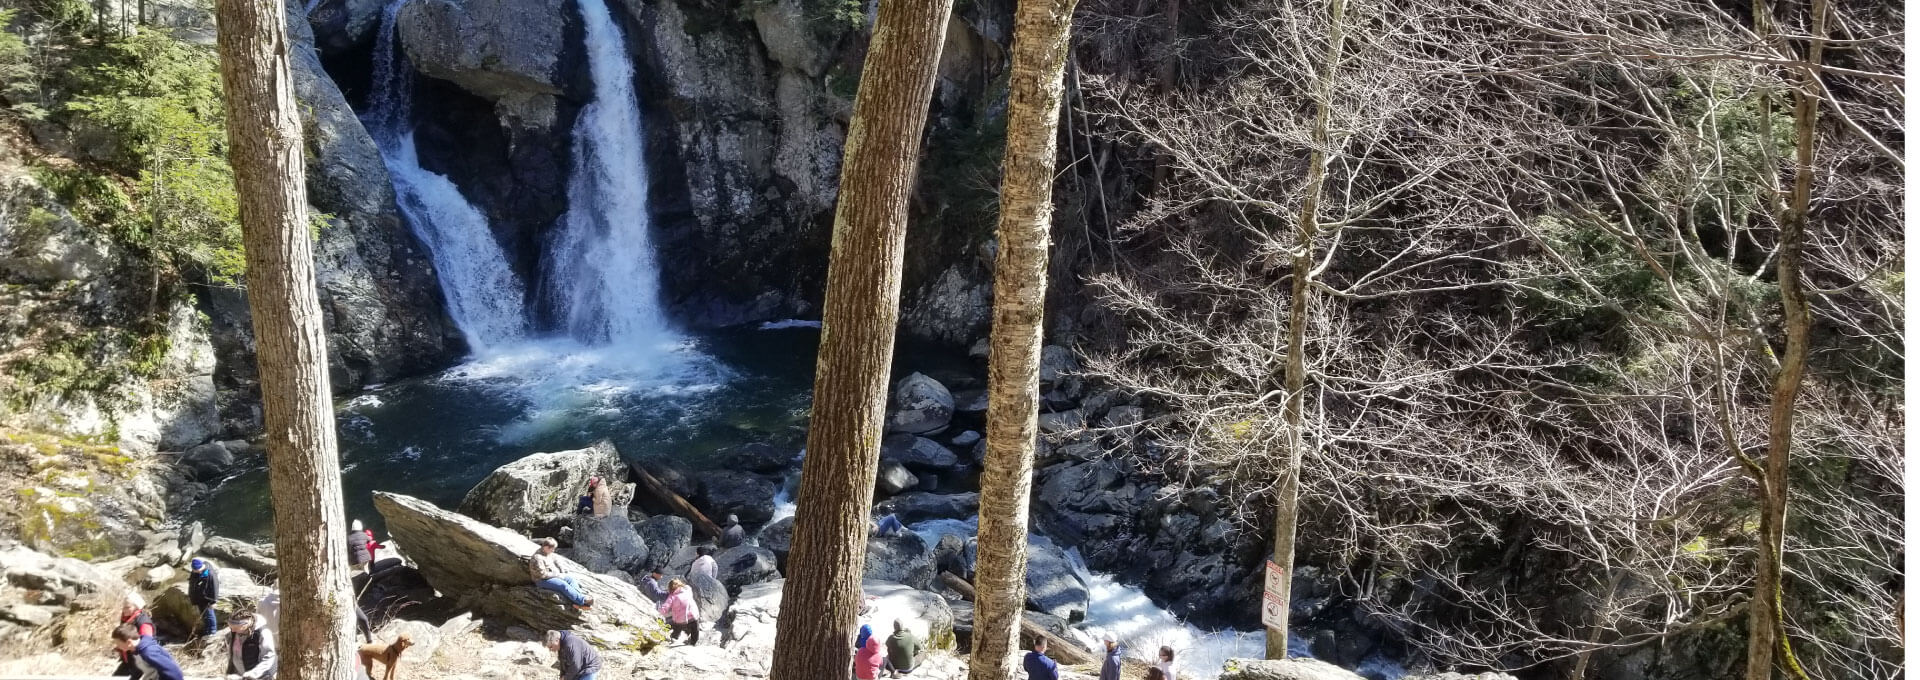 View of Bash Bish Falls